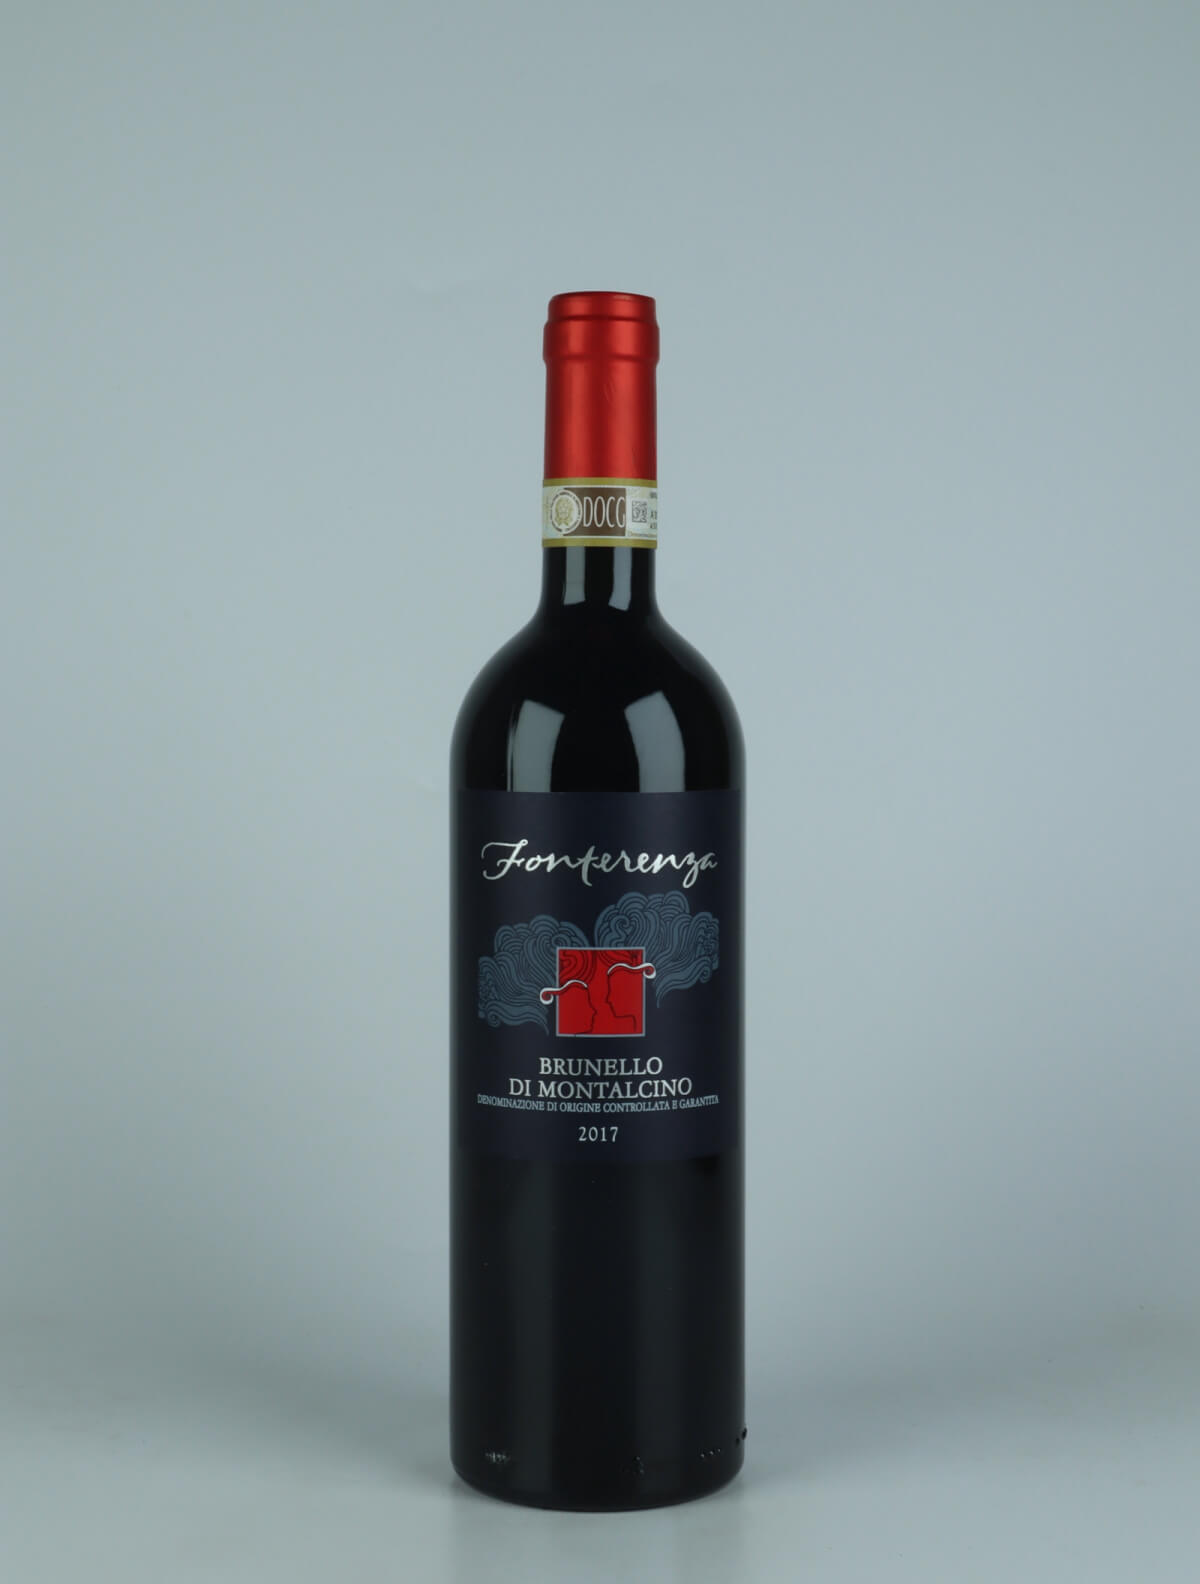 En flaske 2017 Brunello di Montalcino Rødvin fra Fonterenza, Toscana i Italien